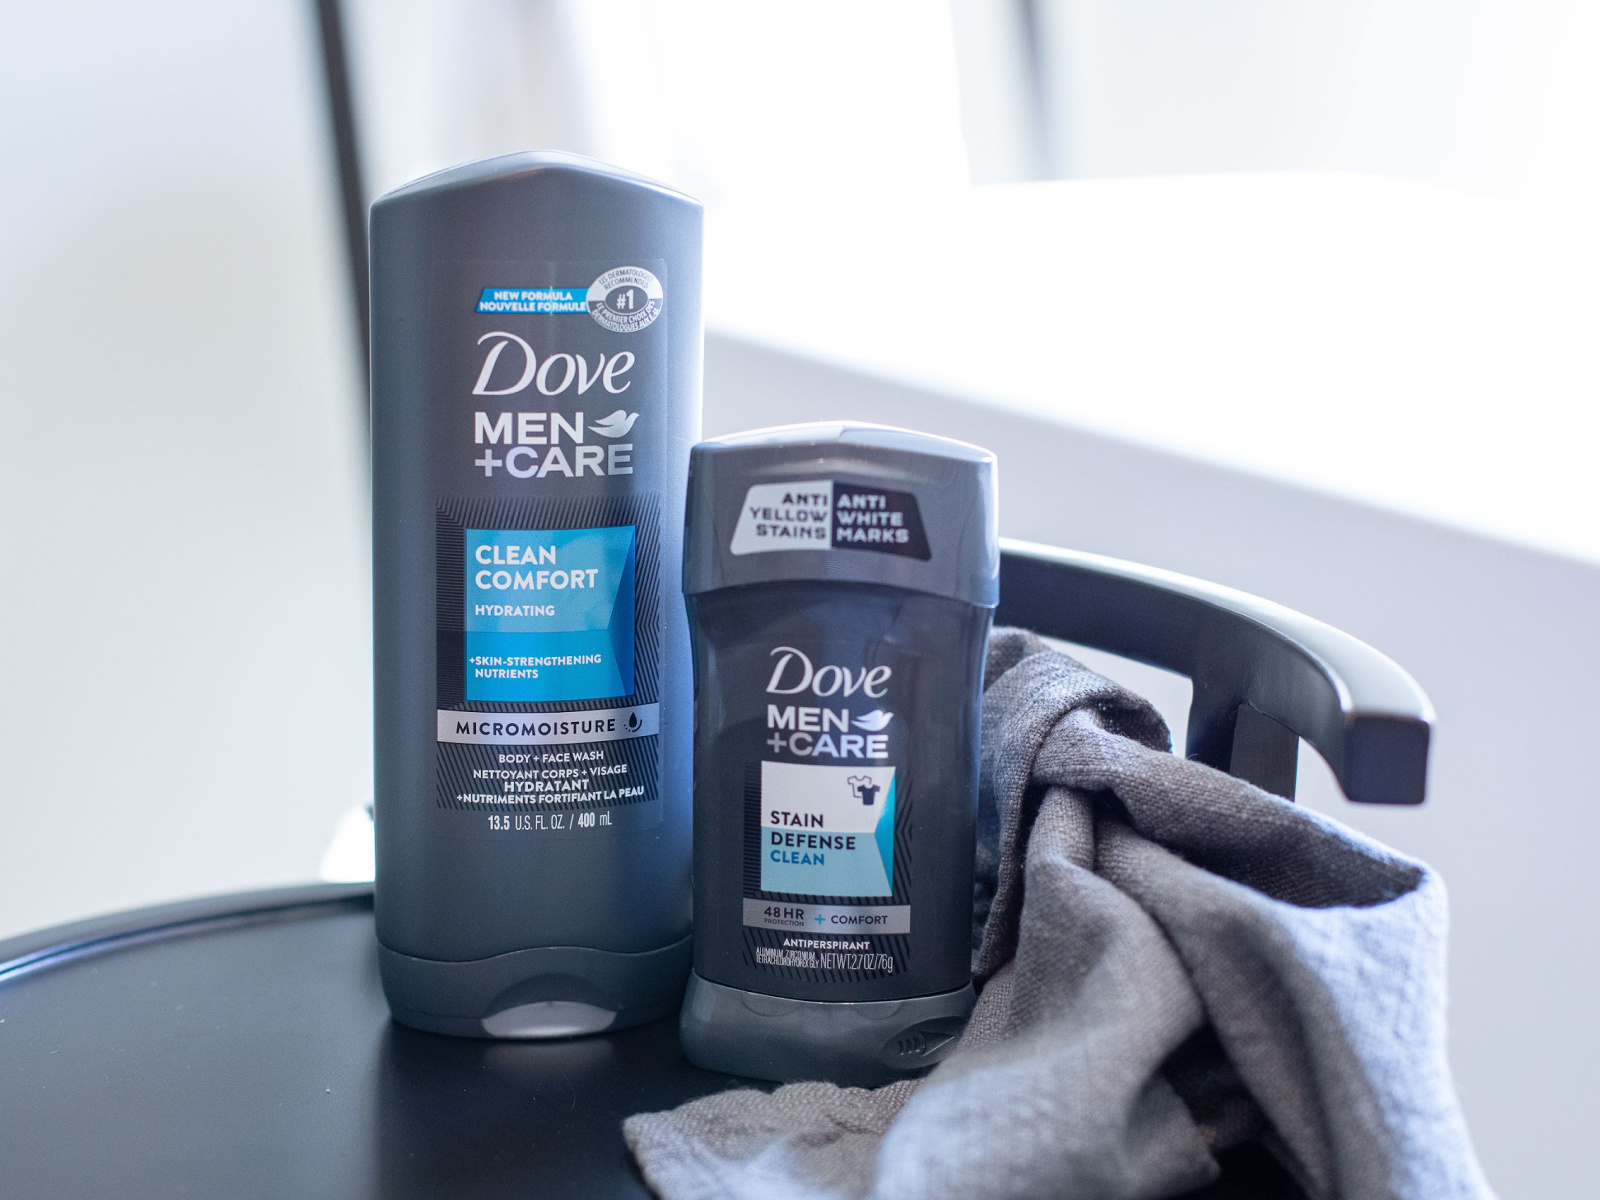 Dove Men+Care Deodorant As Low As $1.99 At Publix (Regular Price $5.99)